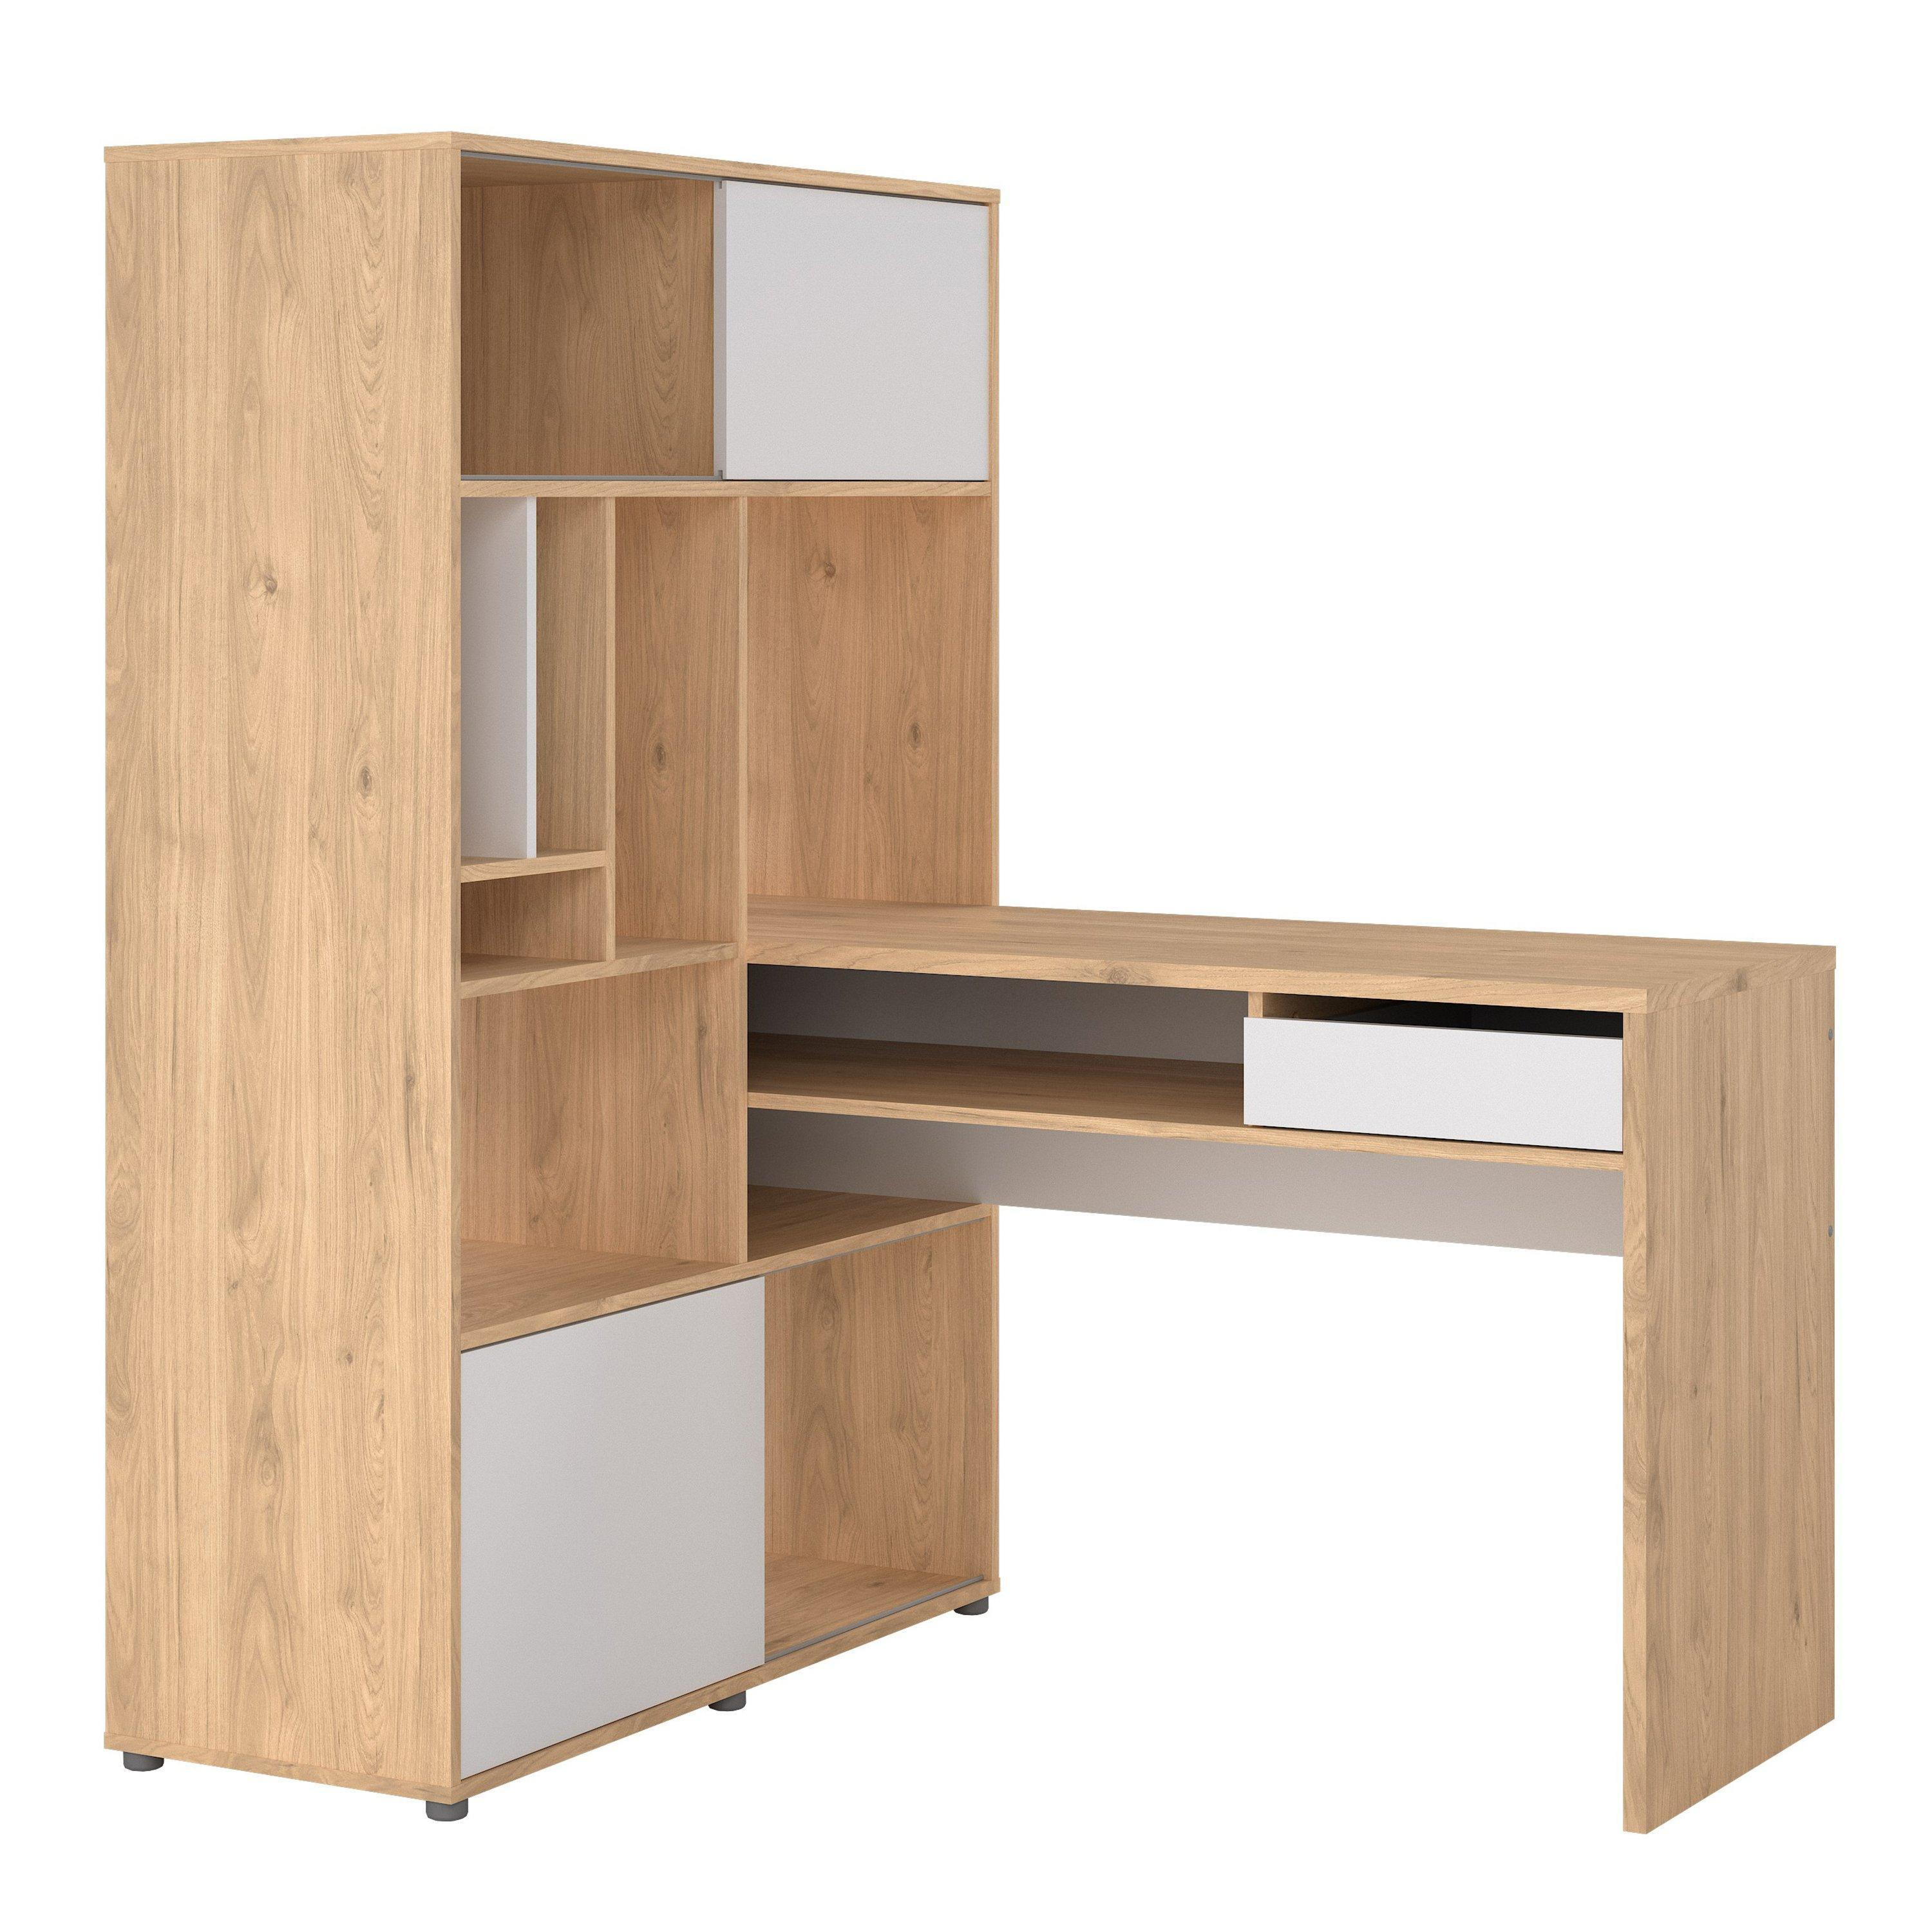 Function Plus Corner Desk with Bookcase - image 1